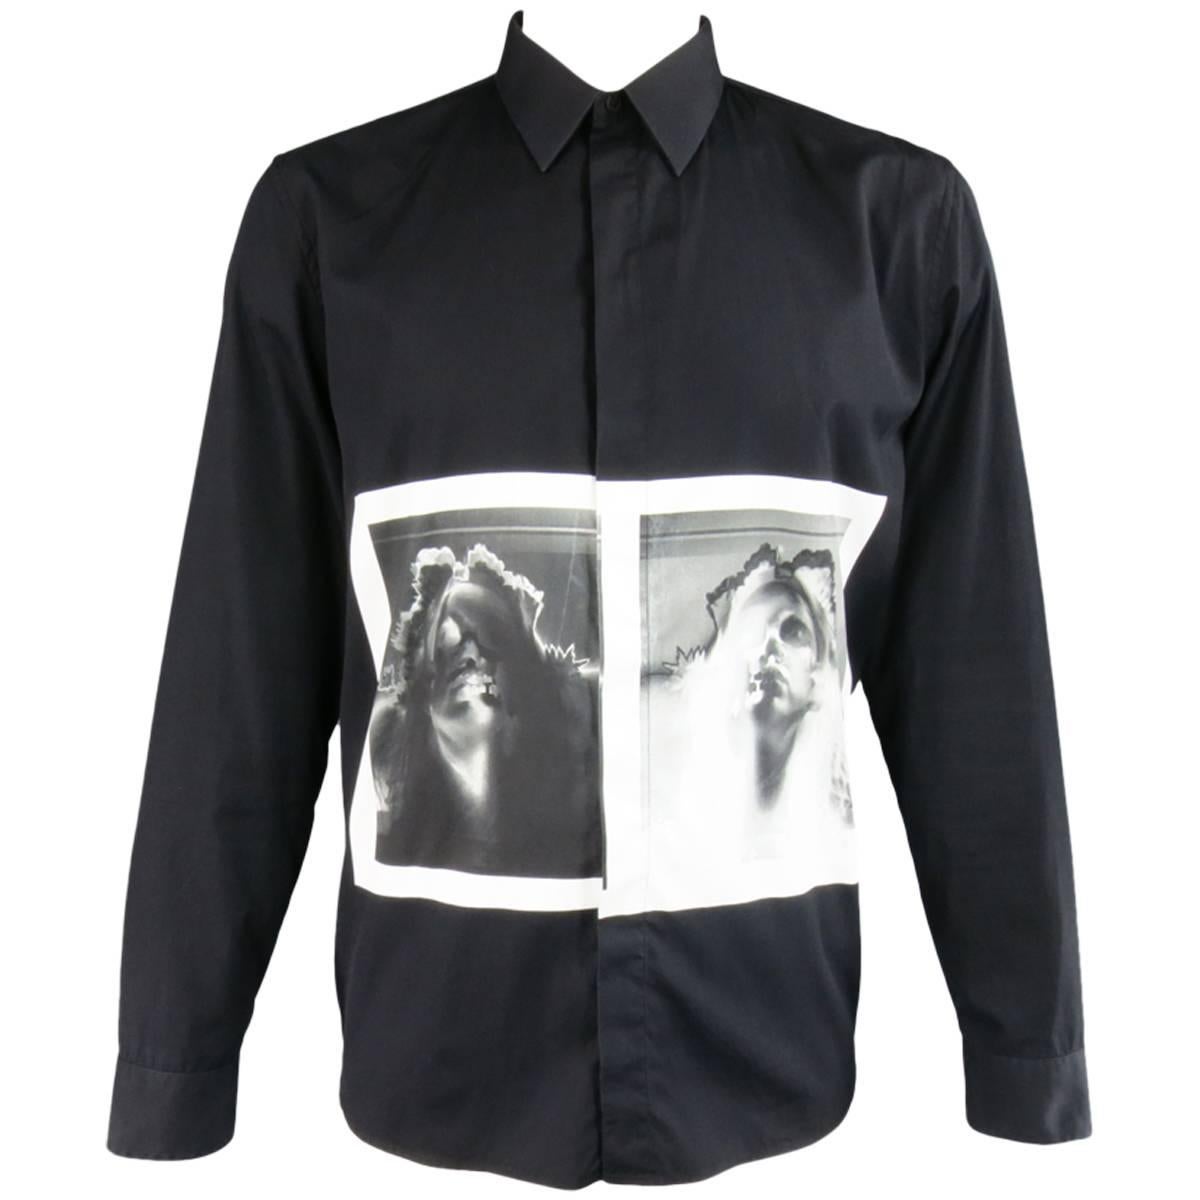 Men's GIVENCHY Size L Black & White X-Ray Graphic Fall 2013 Dress Shirt